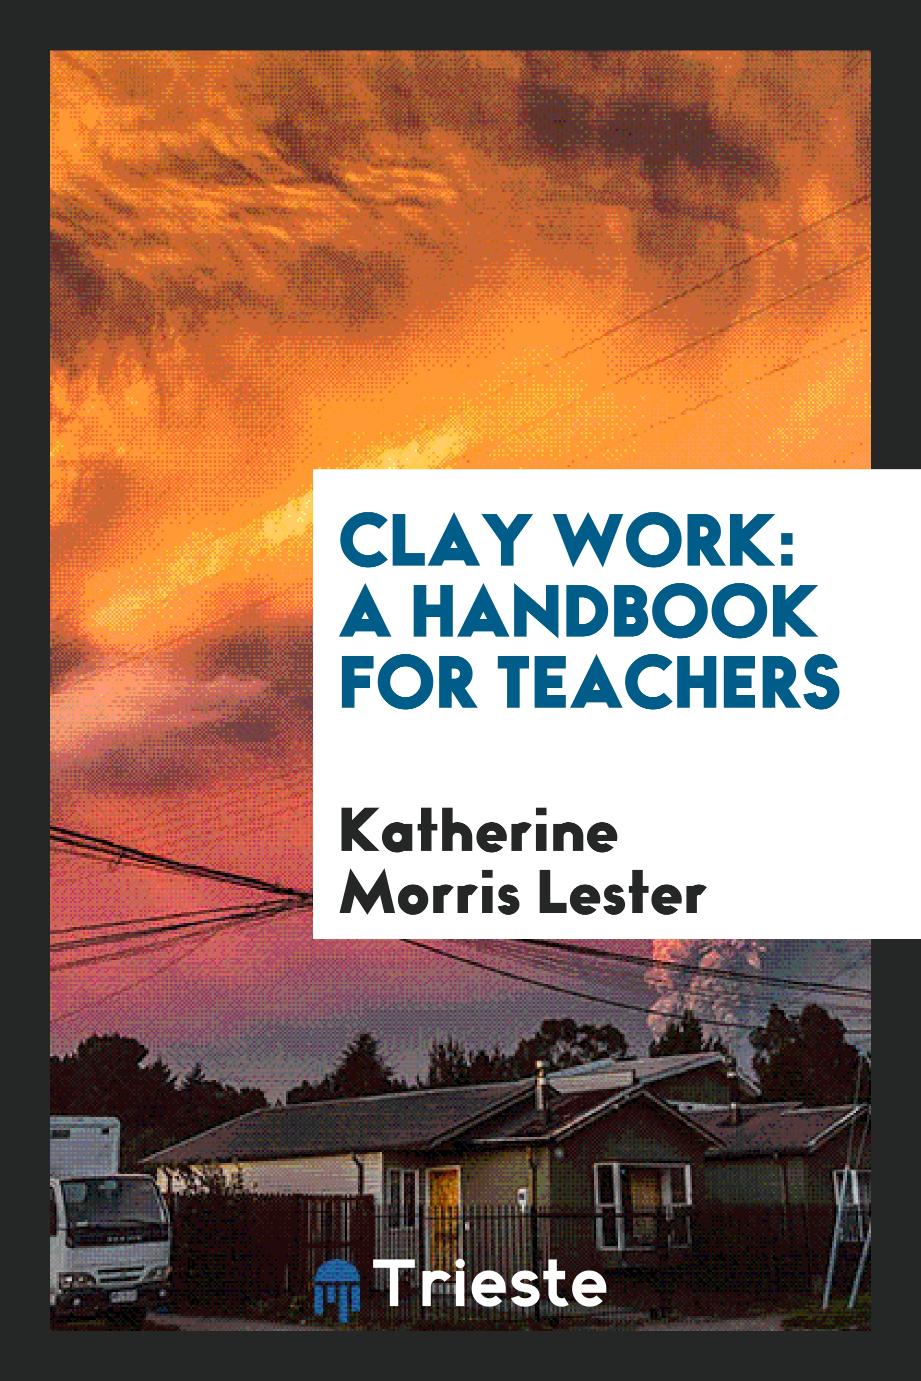 Clay Work: A Handbook for Teachers